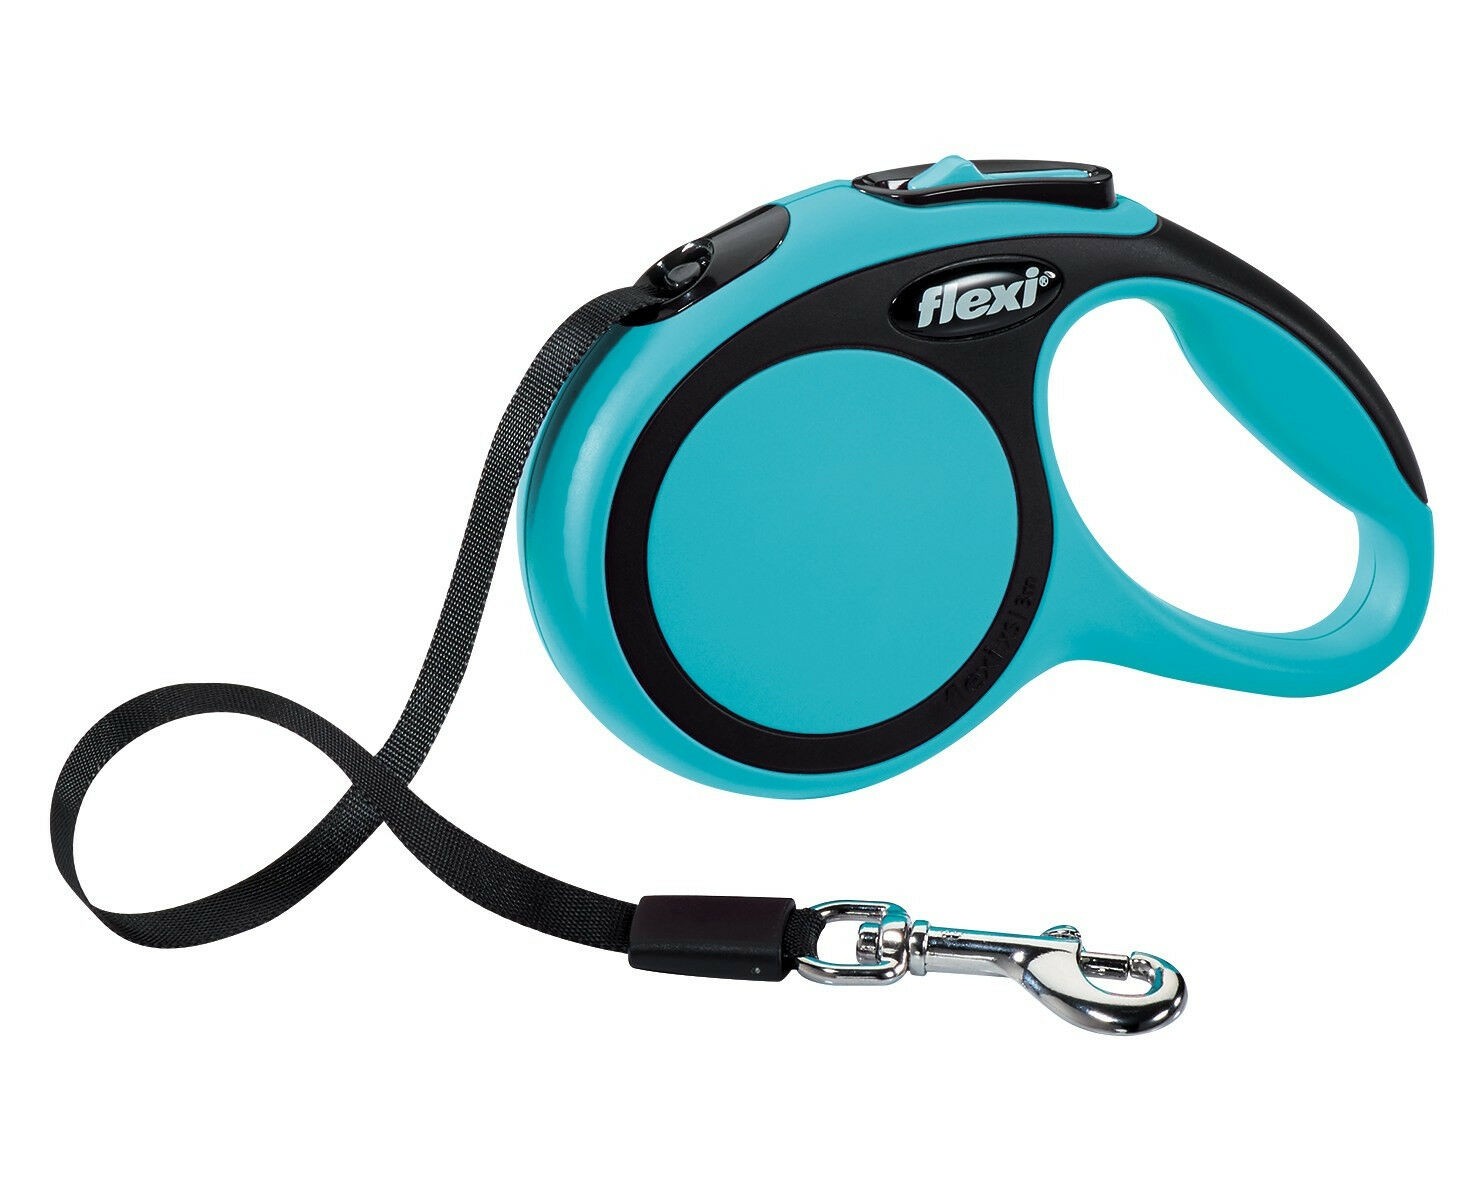 BLUE Flexi LGE 5M COMFORT Tape Dog Leash Lead soft grip short-stroke braking system